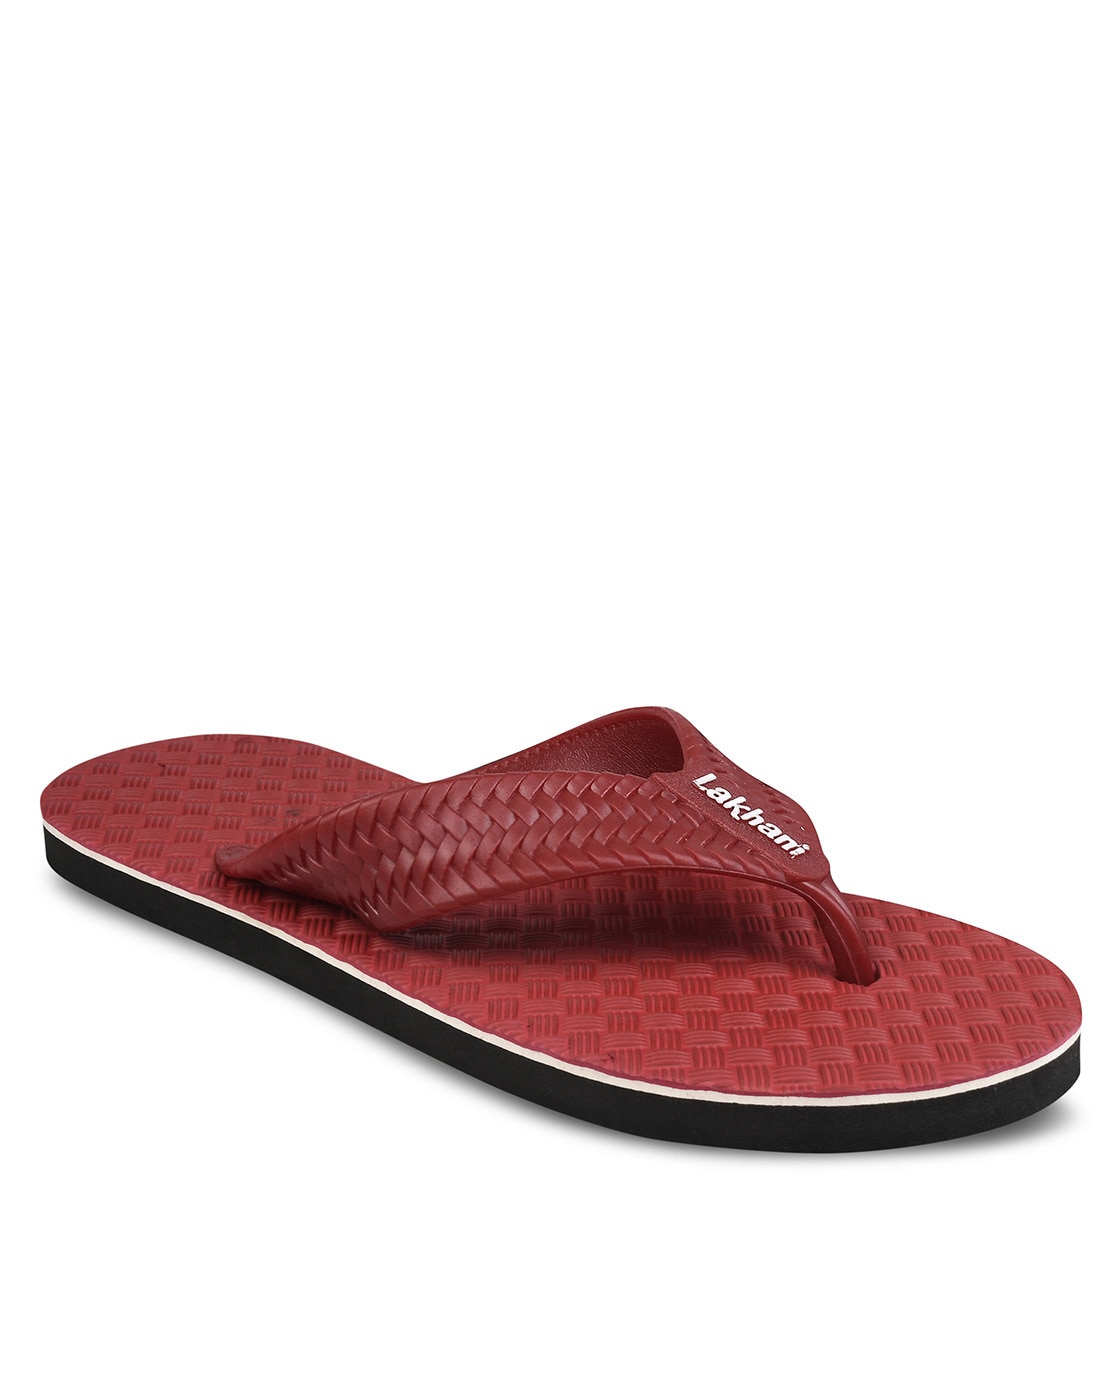 Lakhani Pace Men Casual Soft Sandal Black/red Karan.01 (9) : Amazon.in:  Fashion